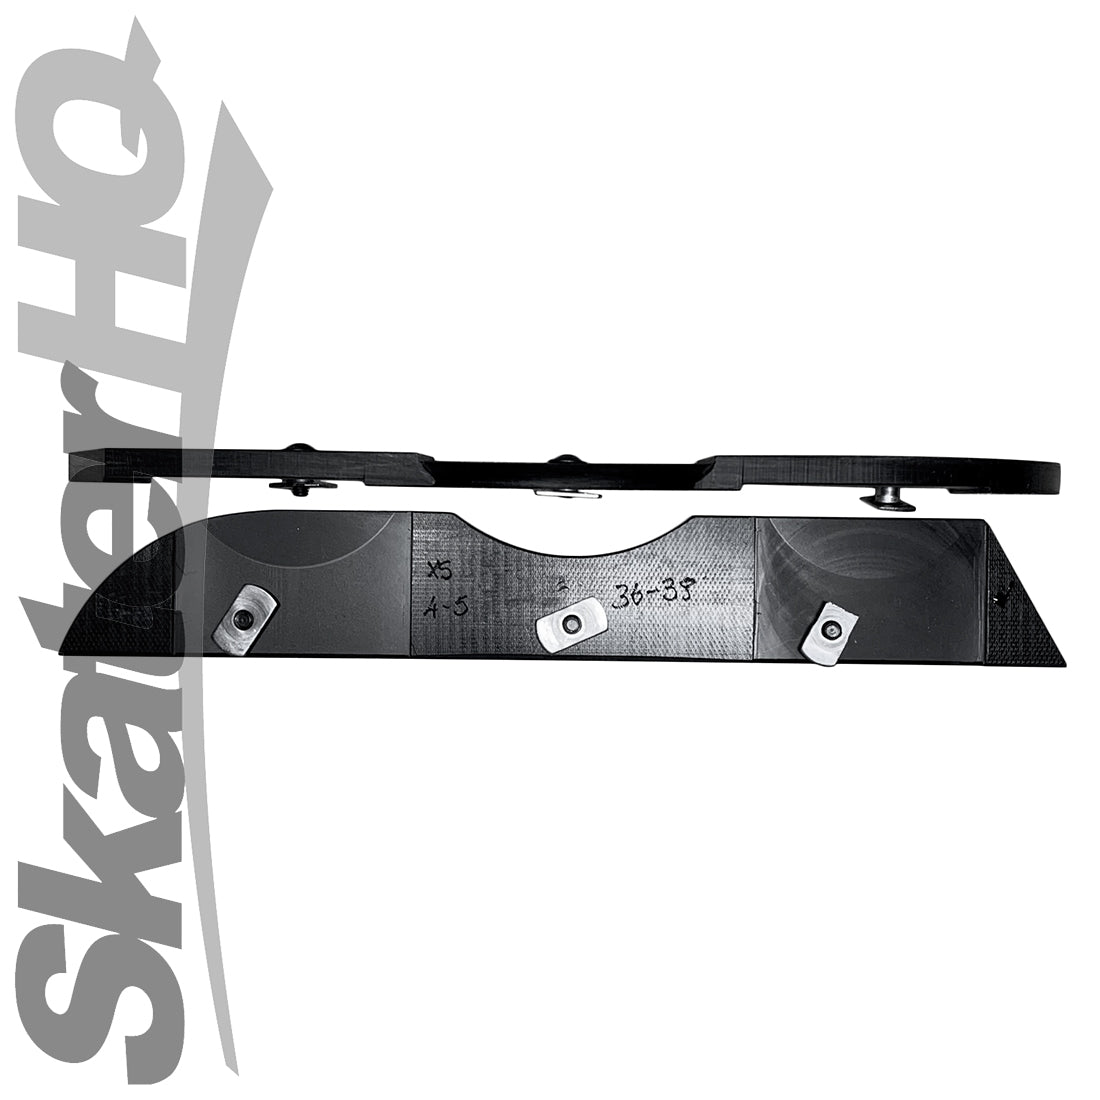 Sliqx Aeon Soul Plate Sliders - EU43-44 - Black Inline Hardware and Parts